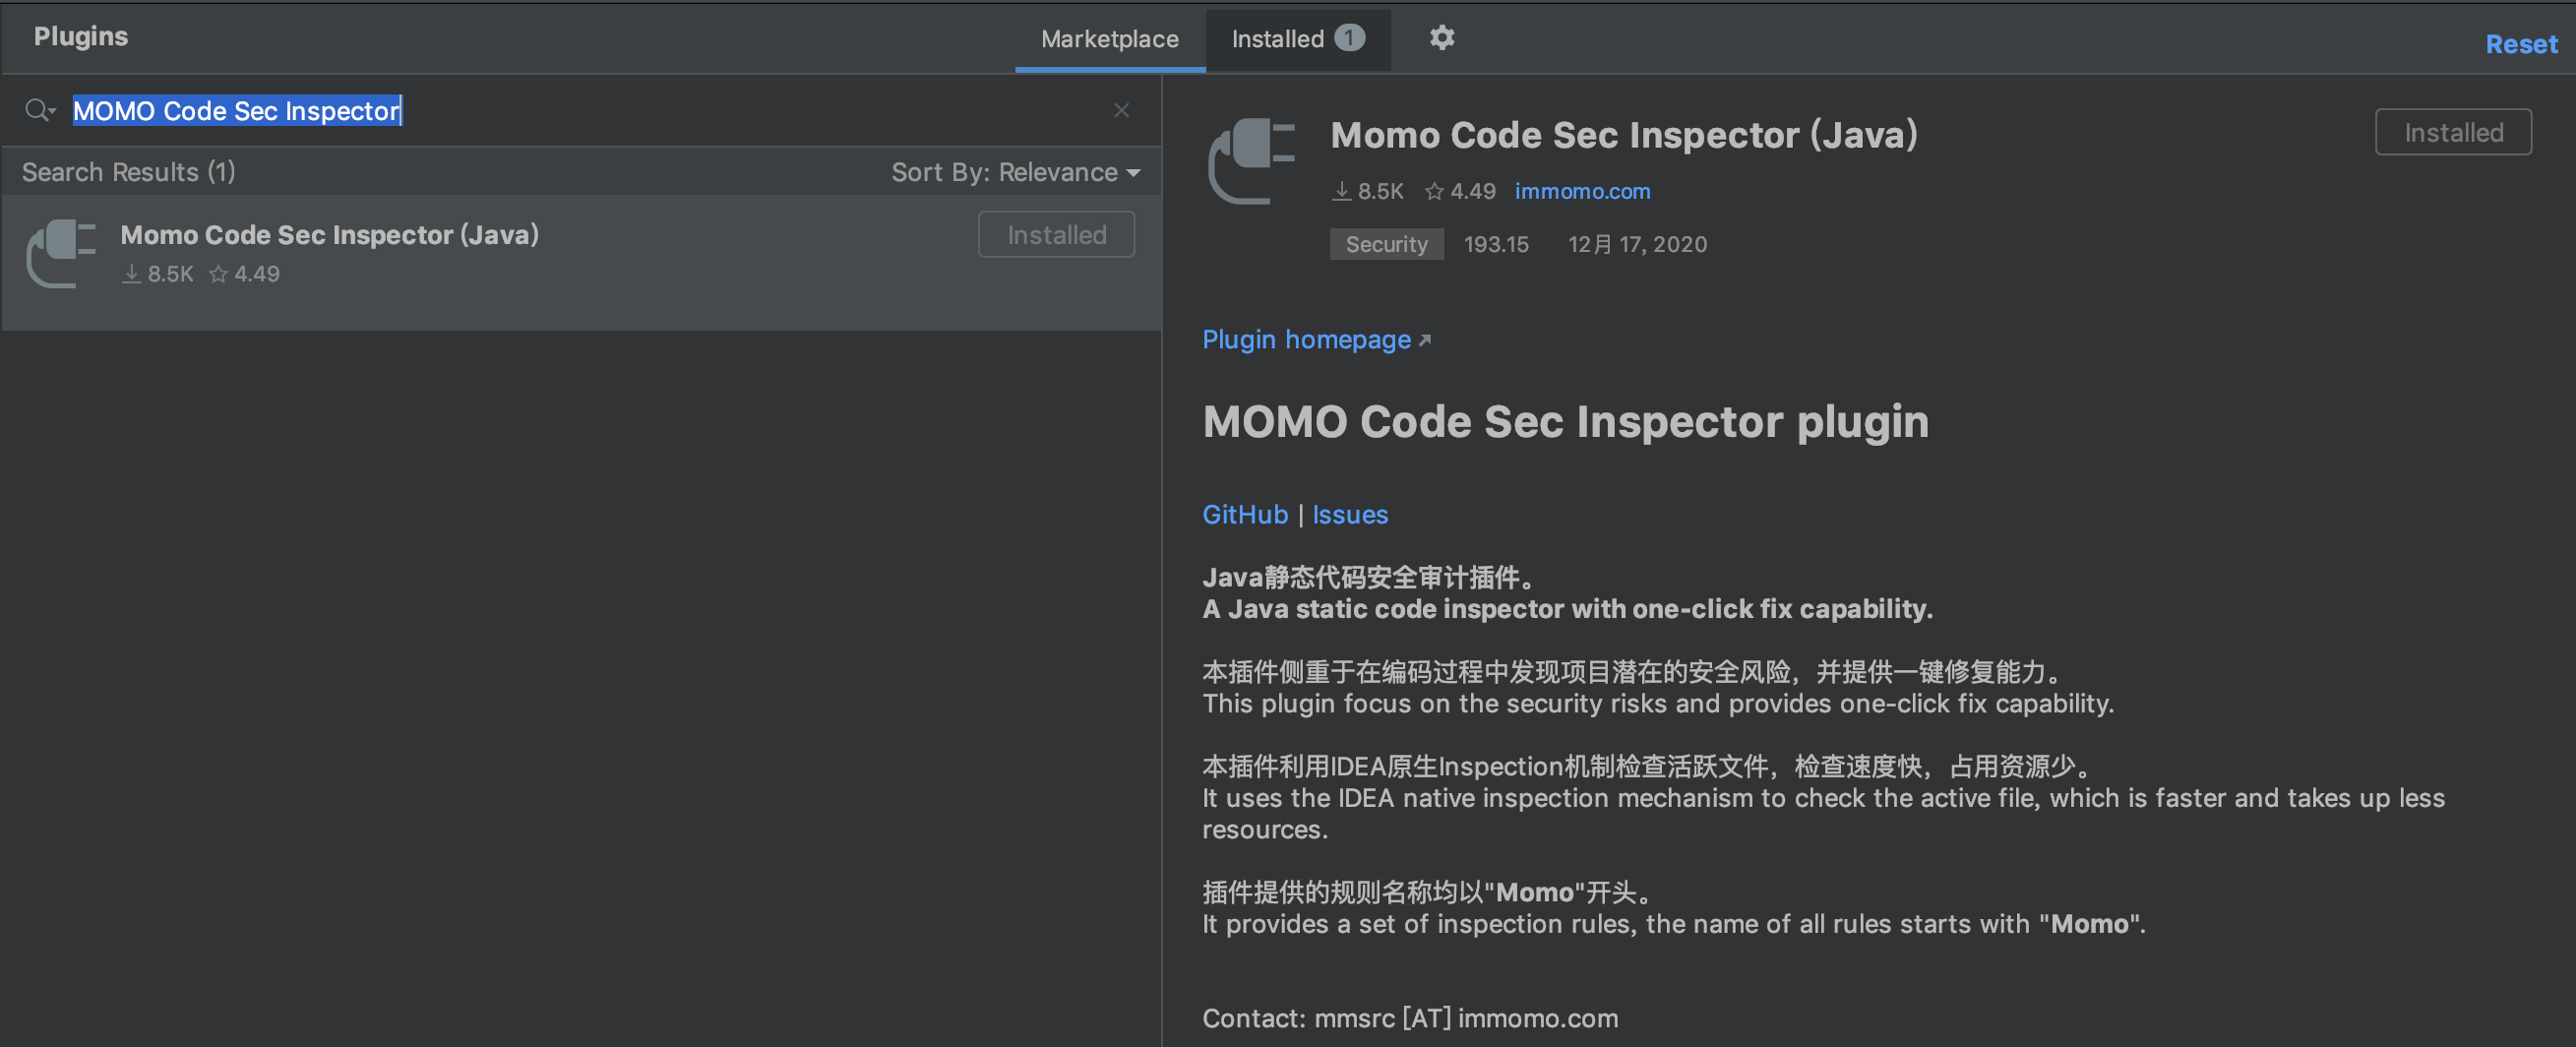 MOMO Code Sec Inspector